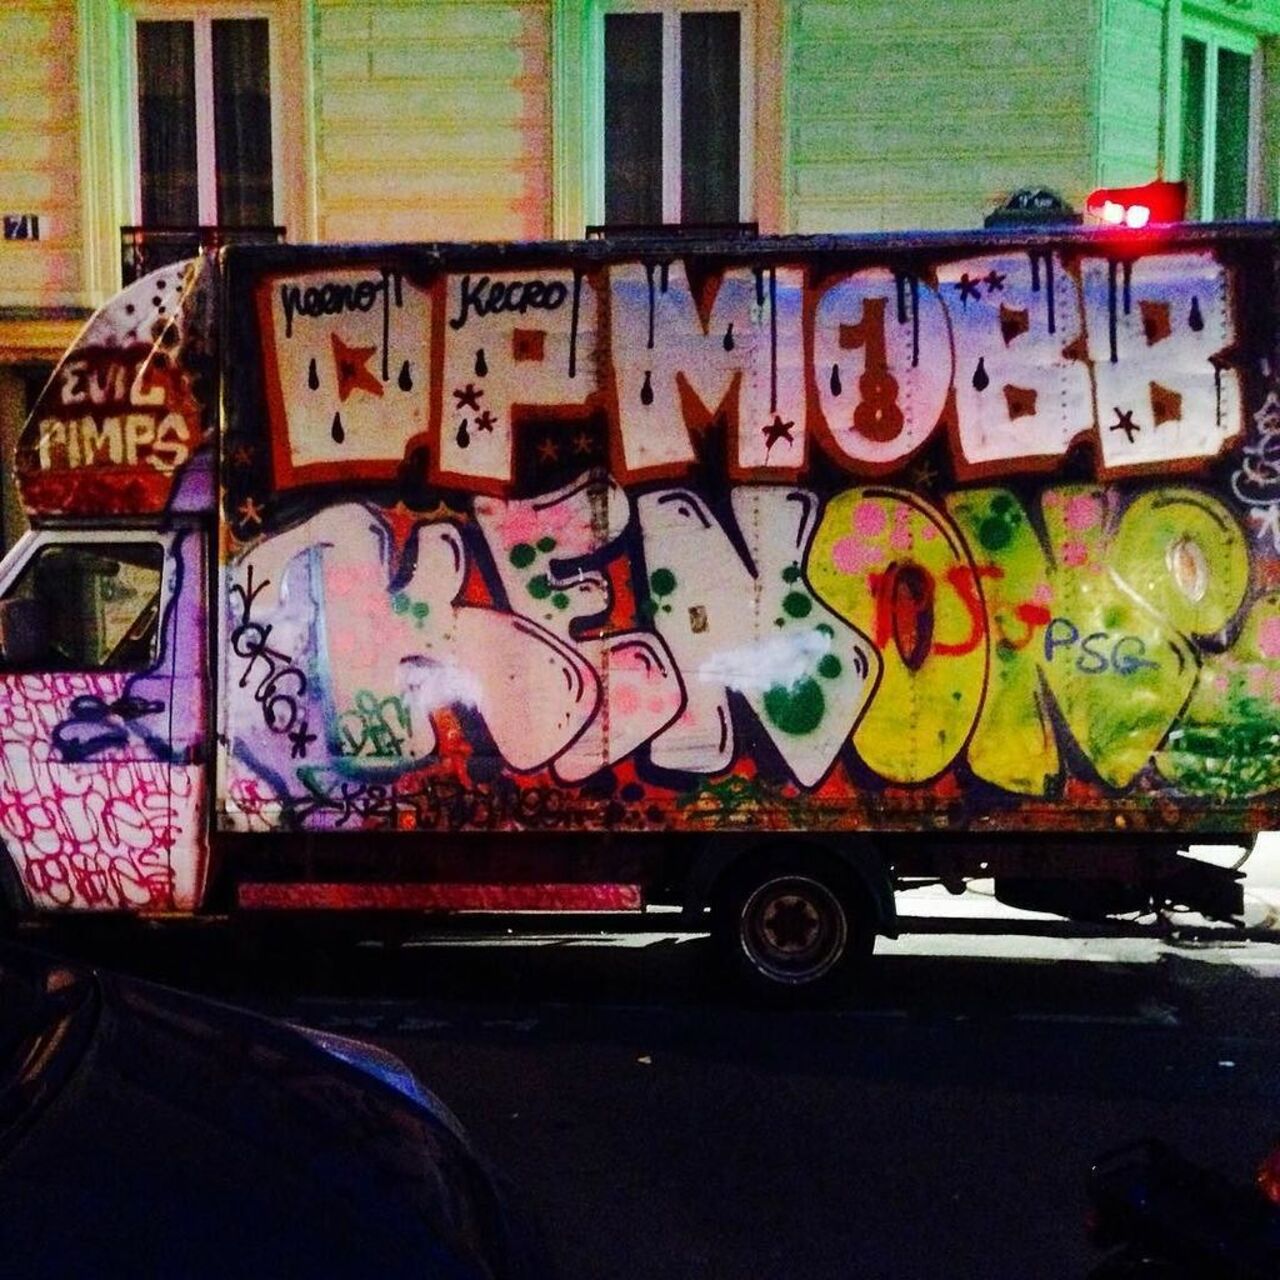 Graf-on-wheels... at night !
#paris #paris18eme #parisbynight #streetart #streetartparis #graffiti #grafittiart by … https://t.co/JWTeSVt8MY